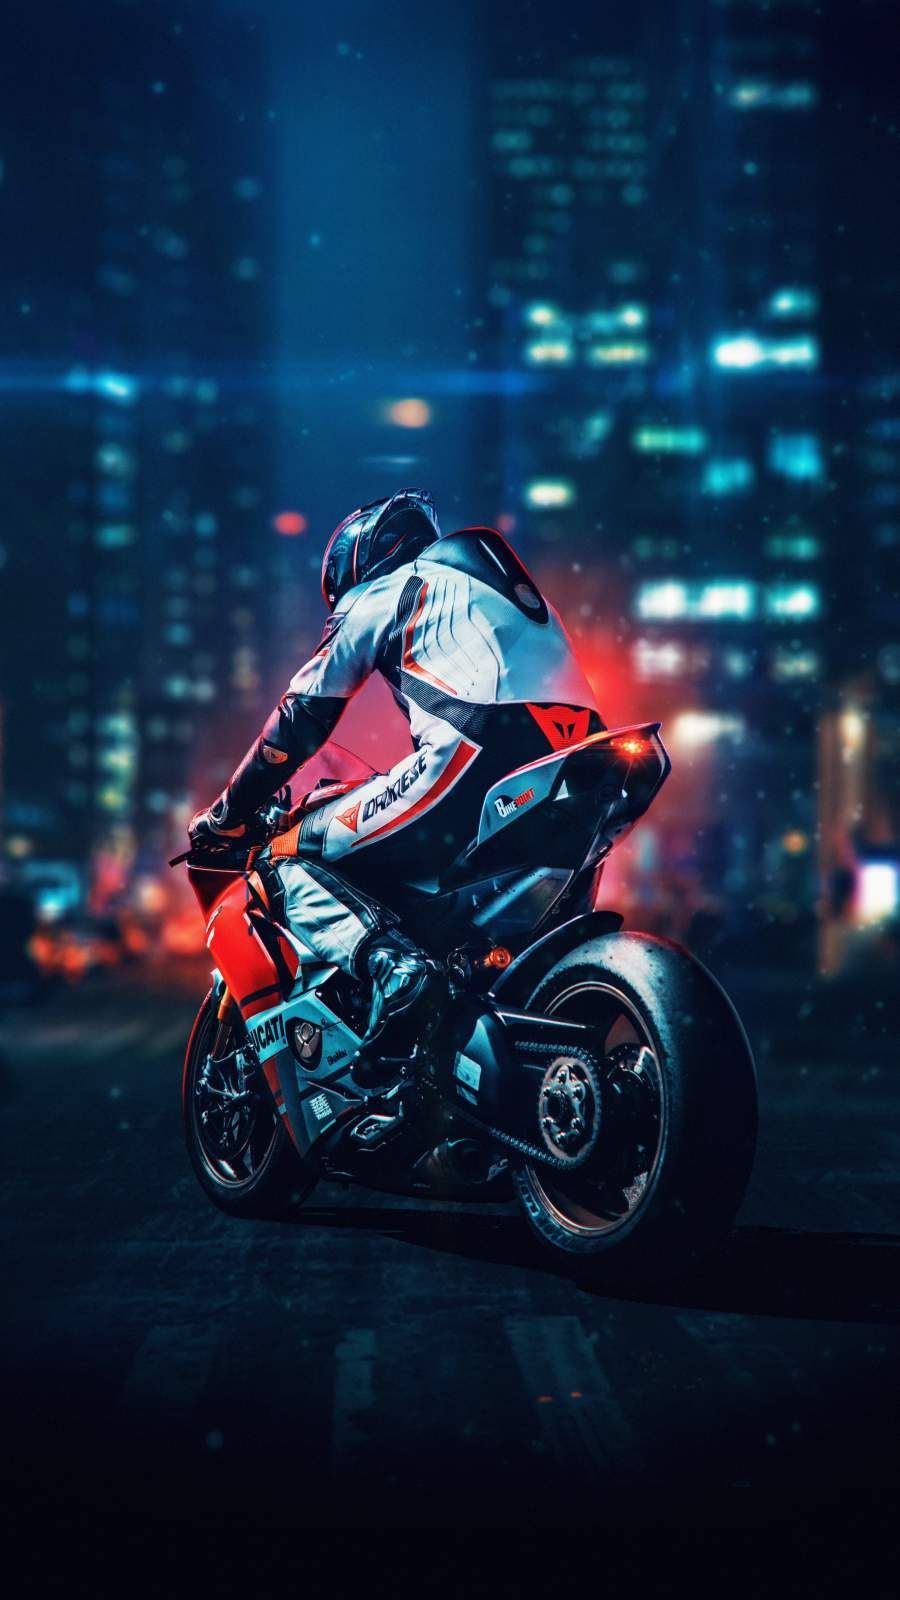 Motorcycle Rider iPhone Wallpaper. Motorcycle riders, Motorcycle